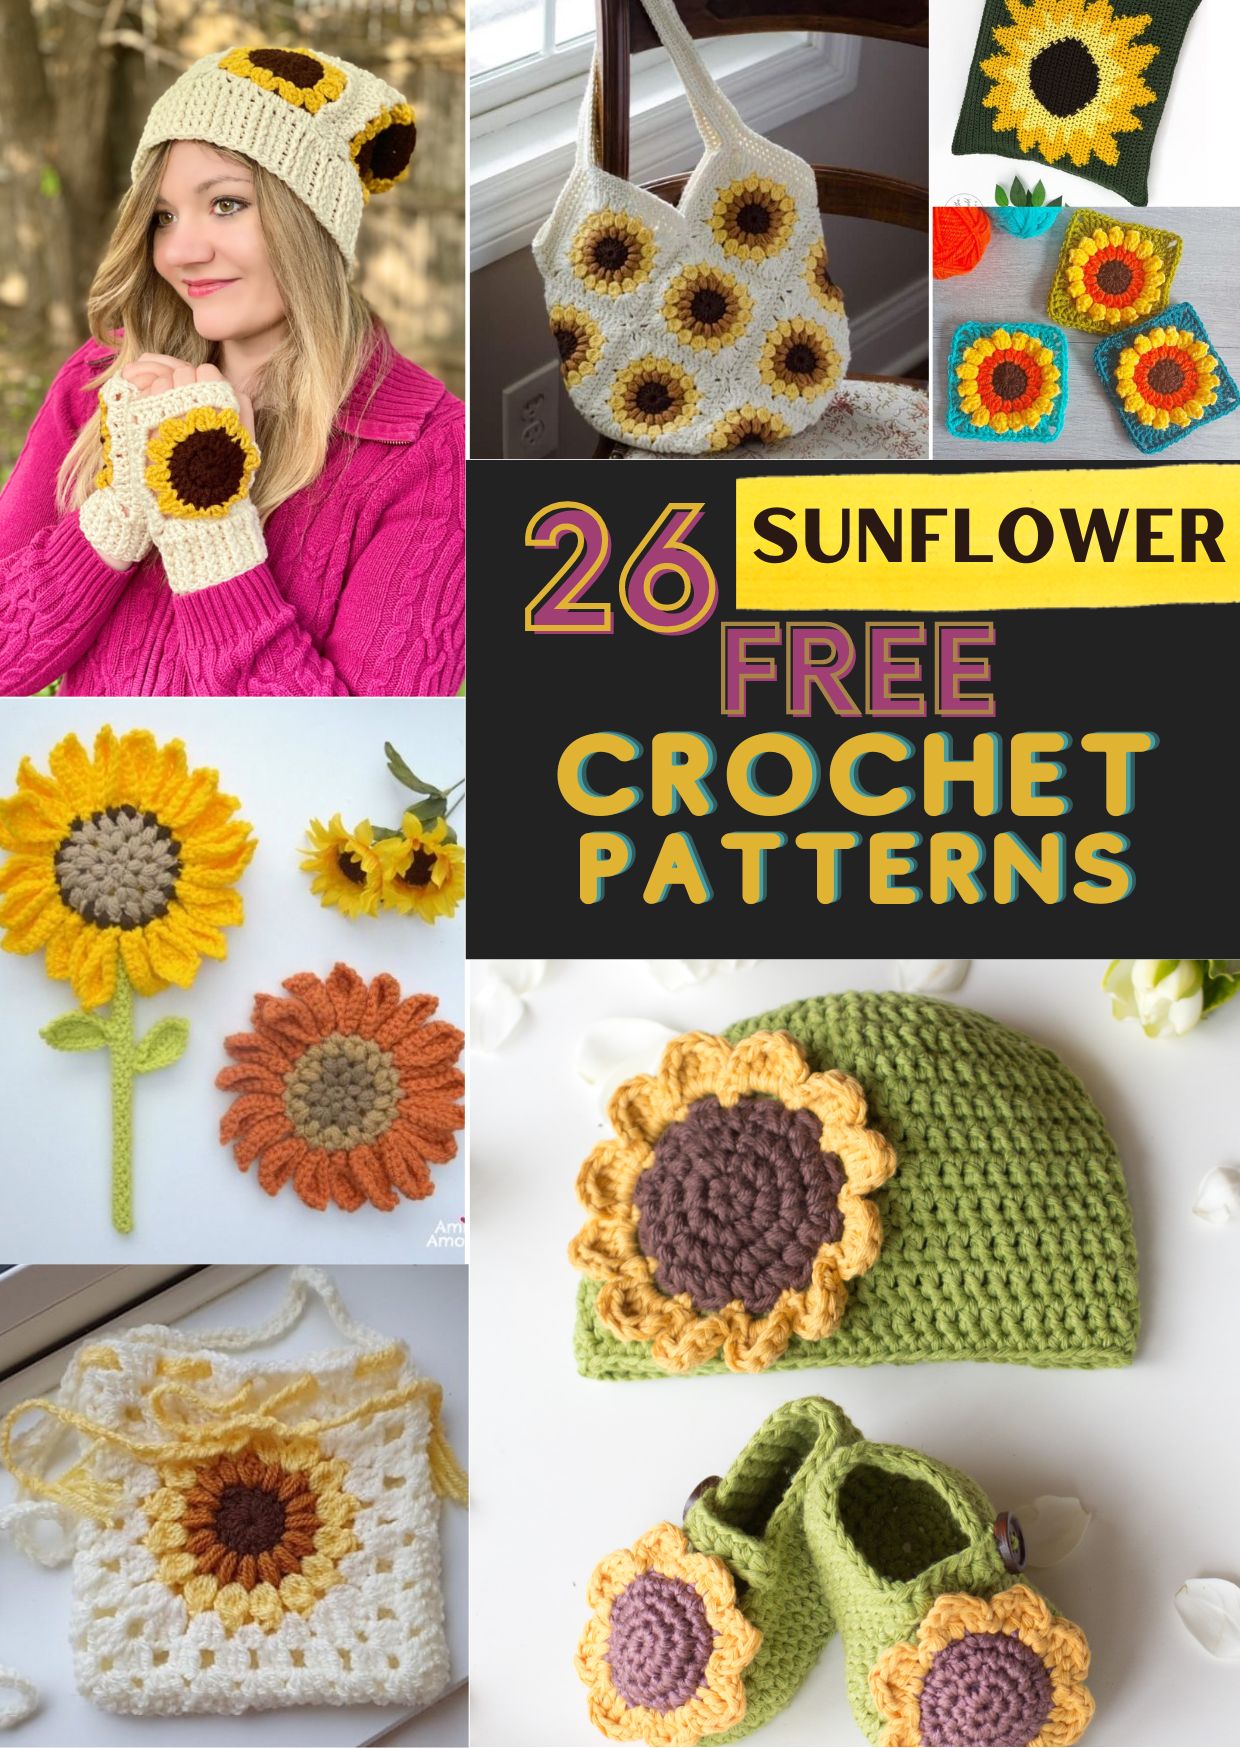 https://fosbasdesigns.com/wp-content/uploads/2023/03/Sunflower-Crochet-free-pattern.jpg